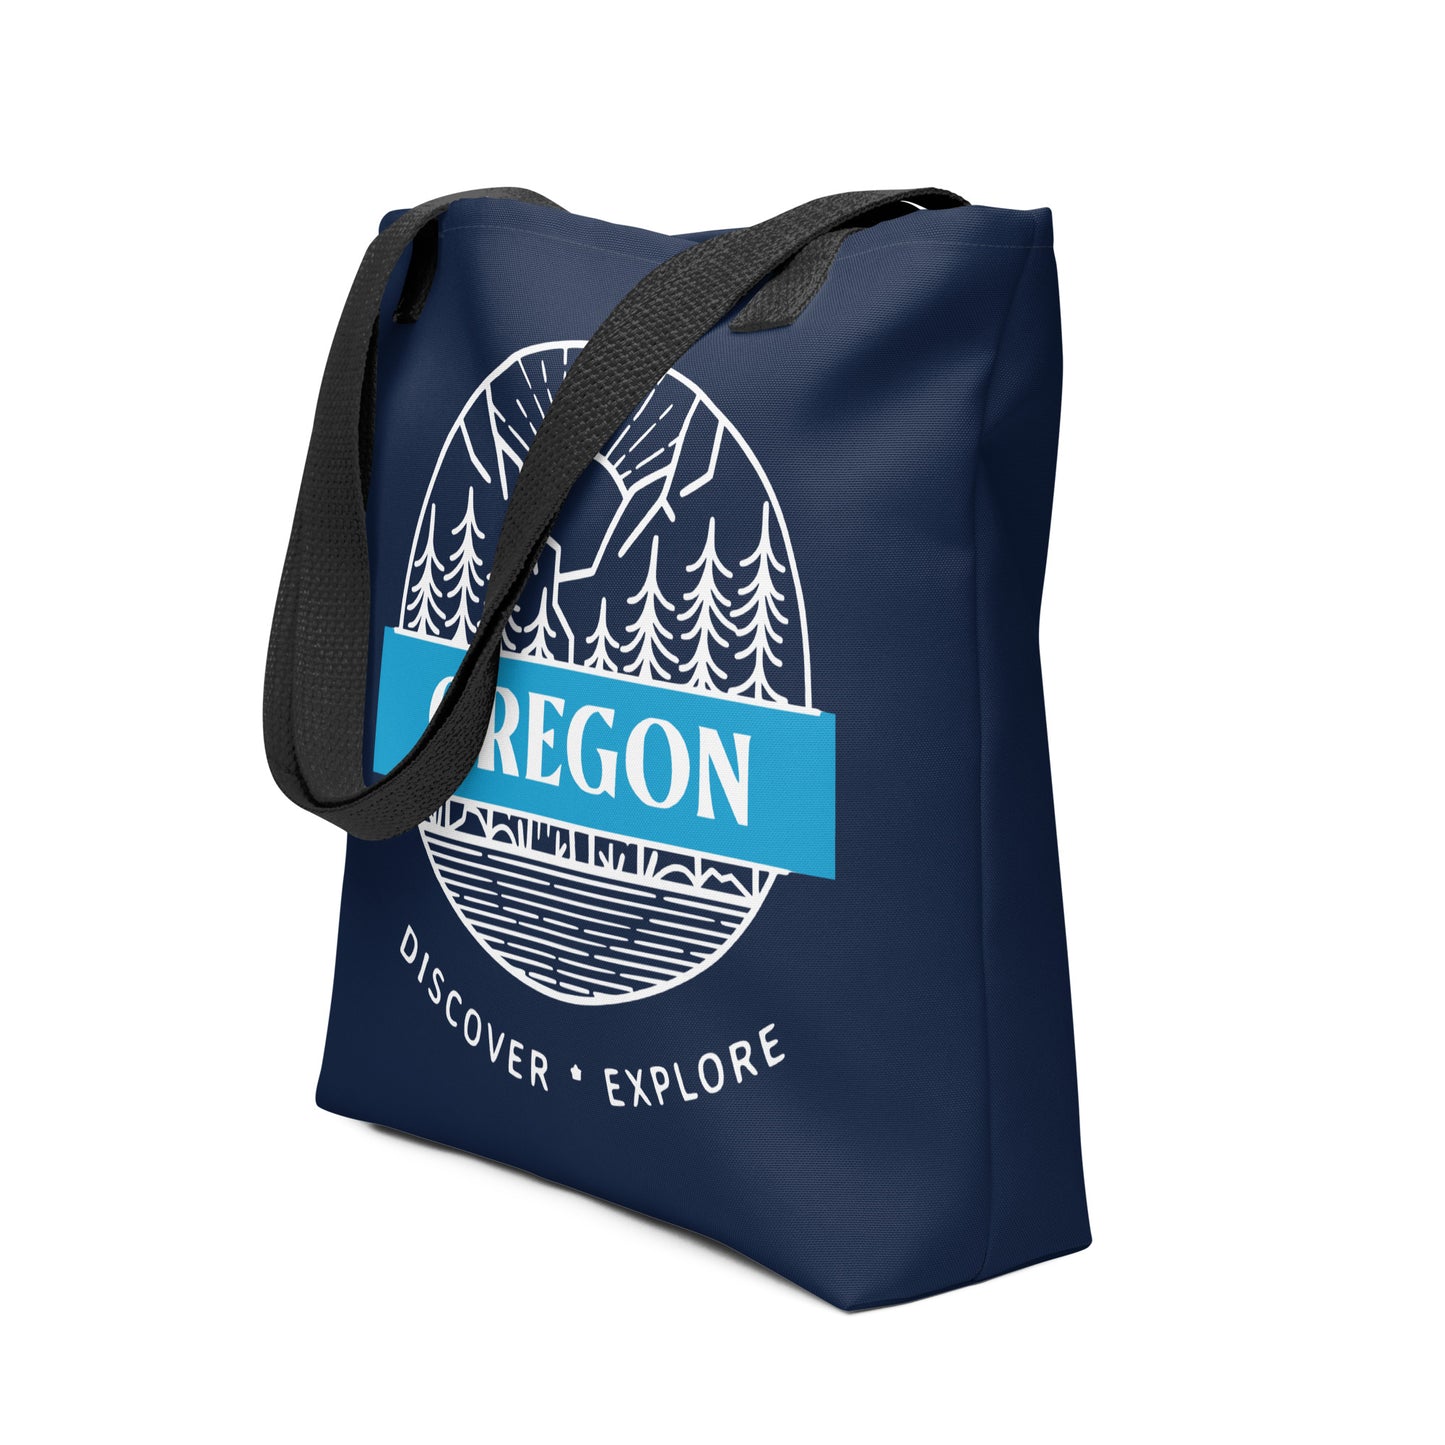 Oregon - Discover - Explore - Tote bag